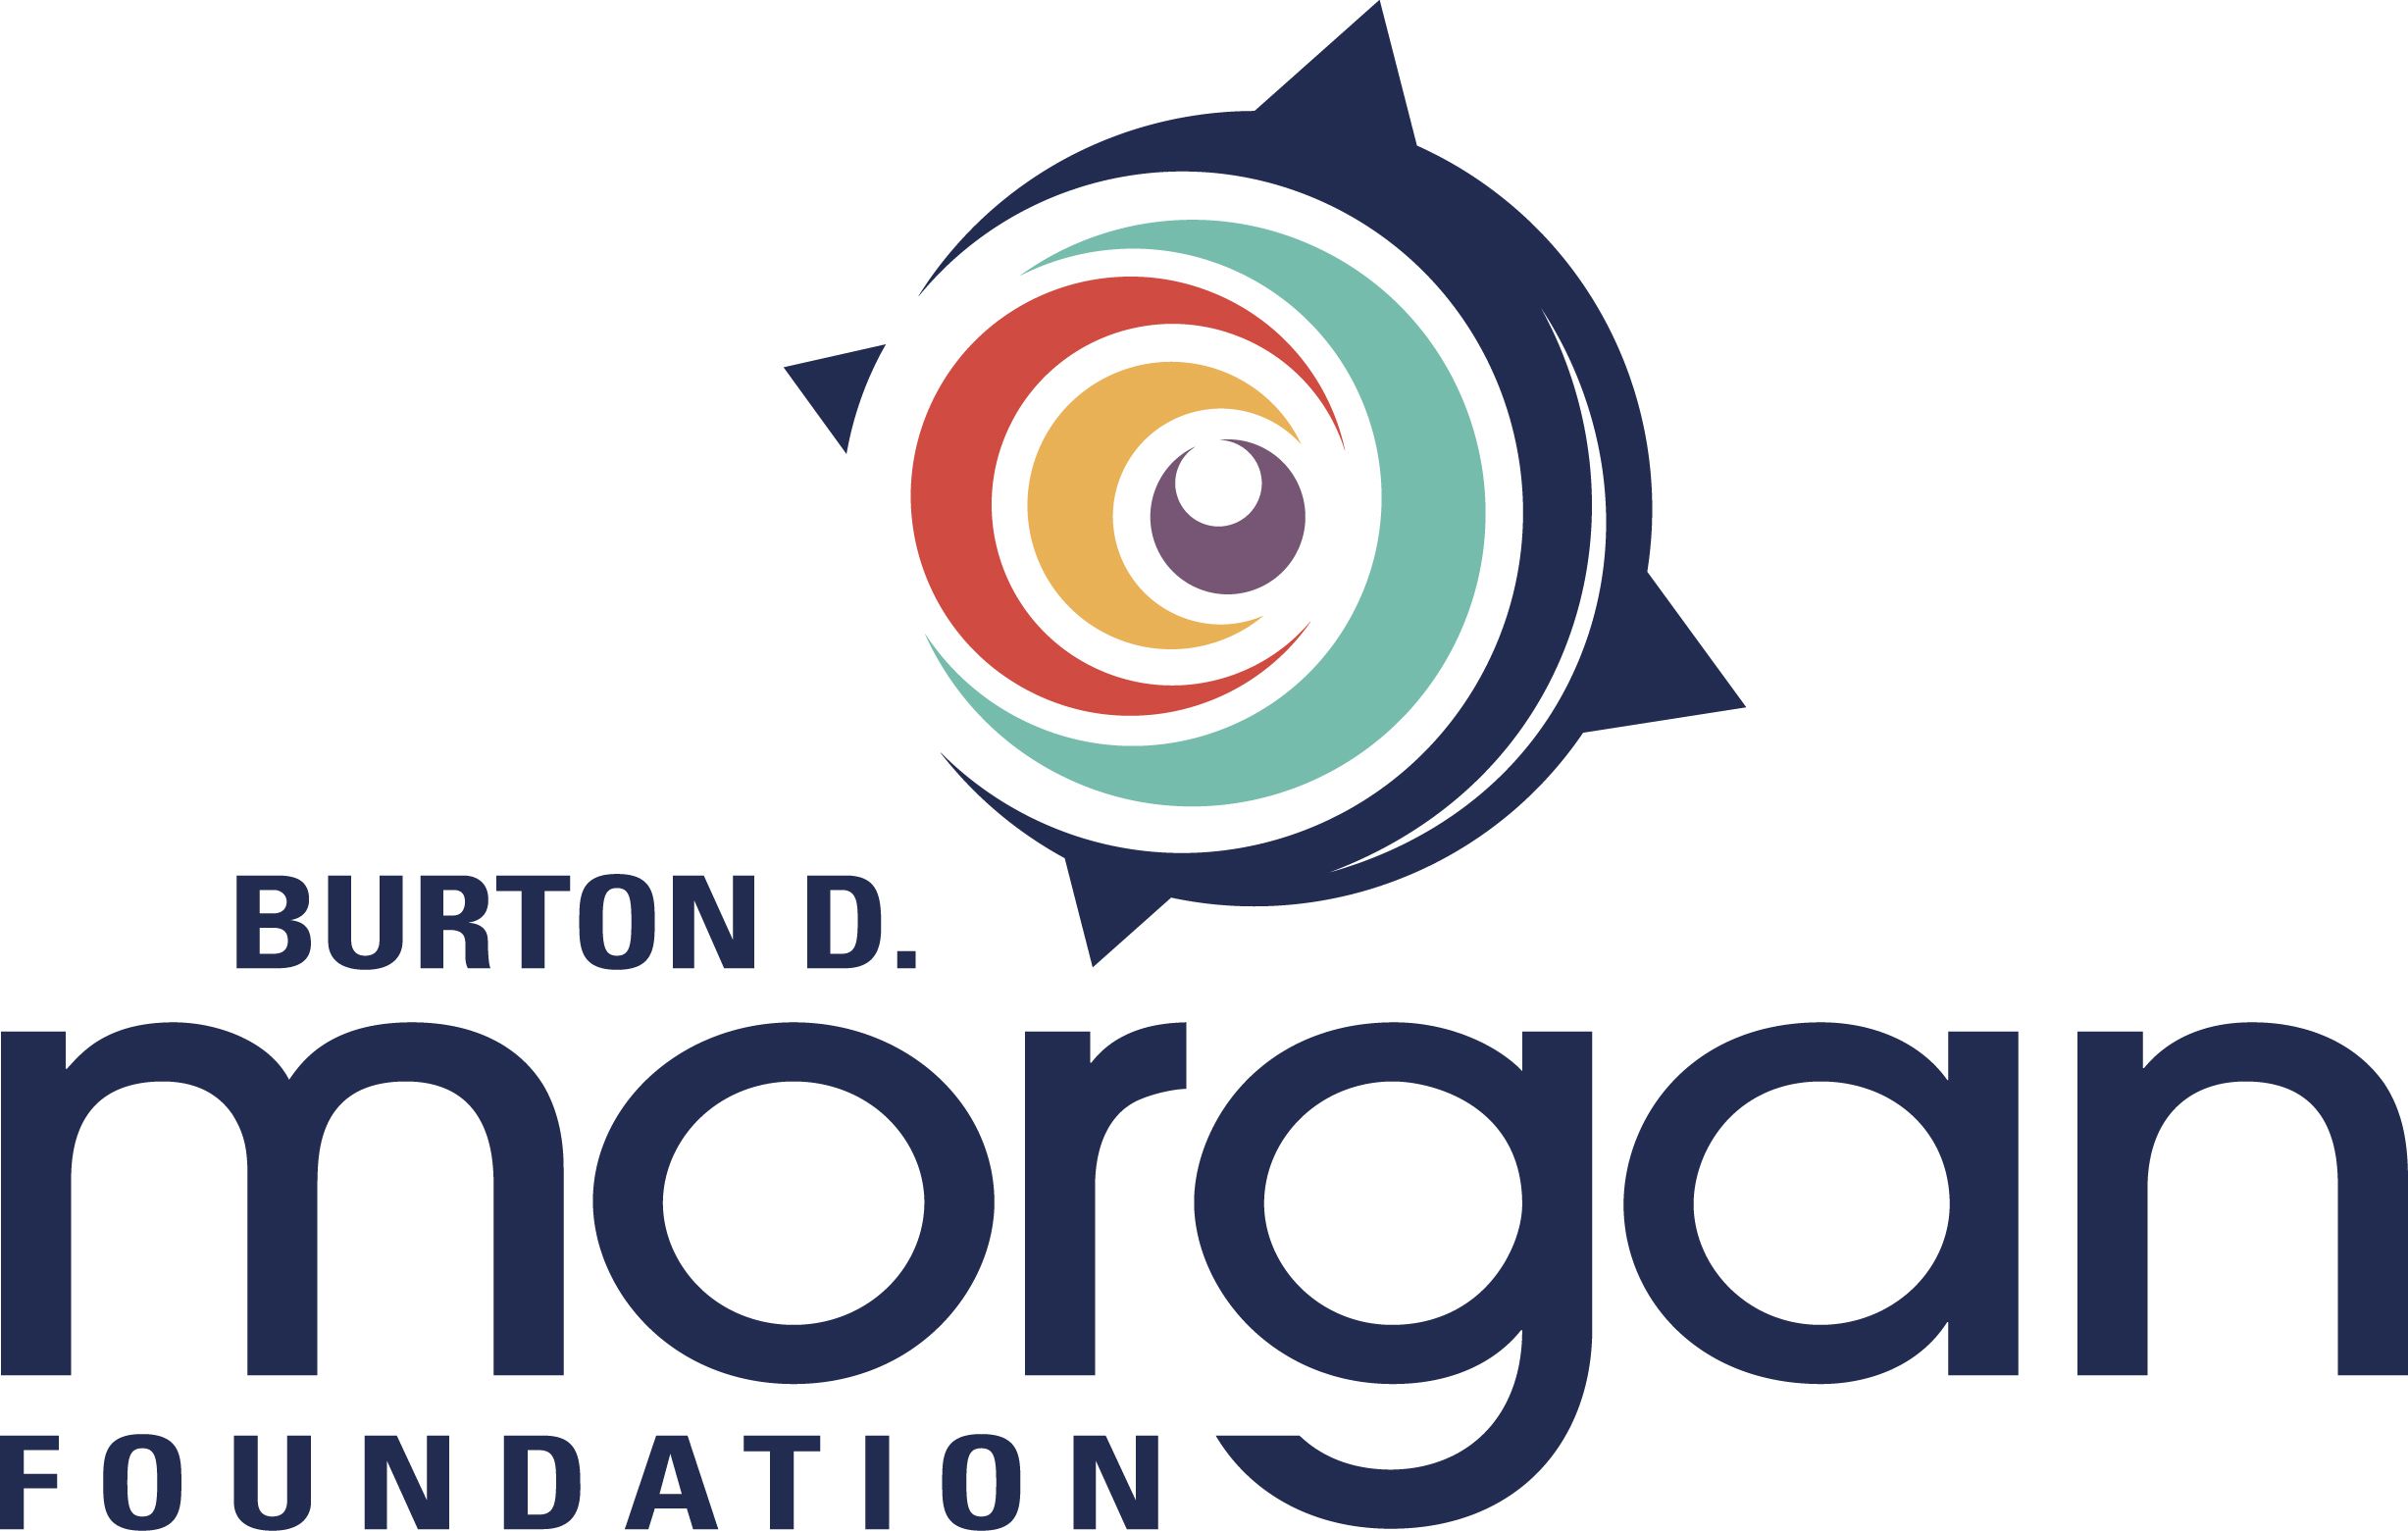 Morgan Foundation